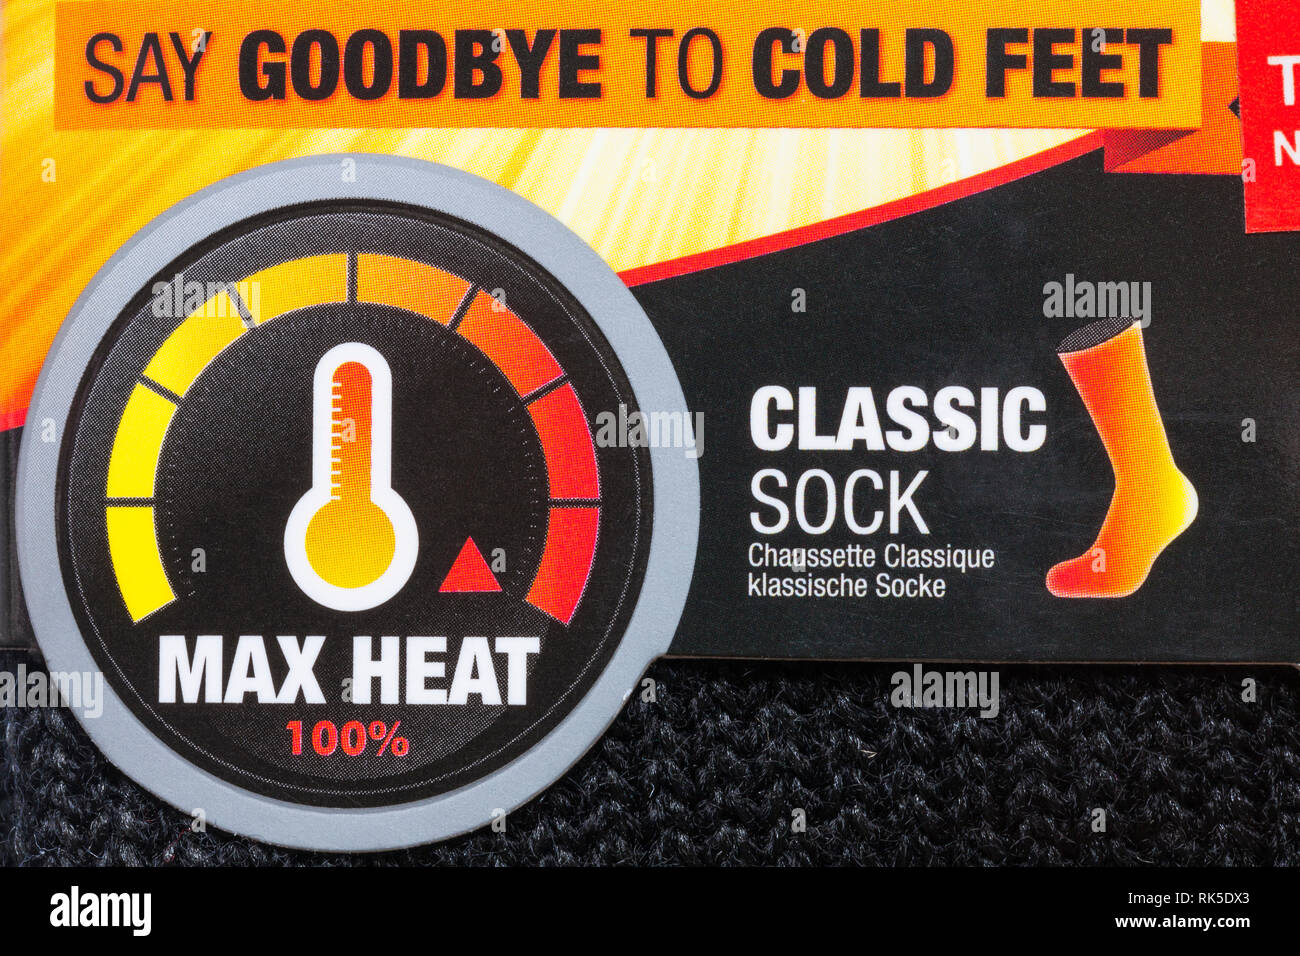 Say goodbye to cold feet max heat 100% detail on label of gelert heat wear  classic sock socks Stock Photo - Alamy